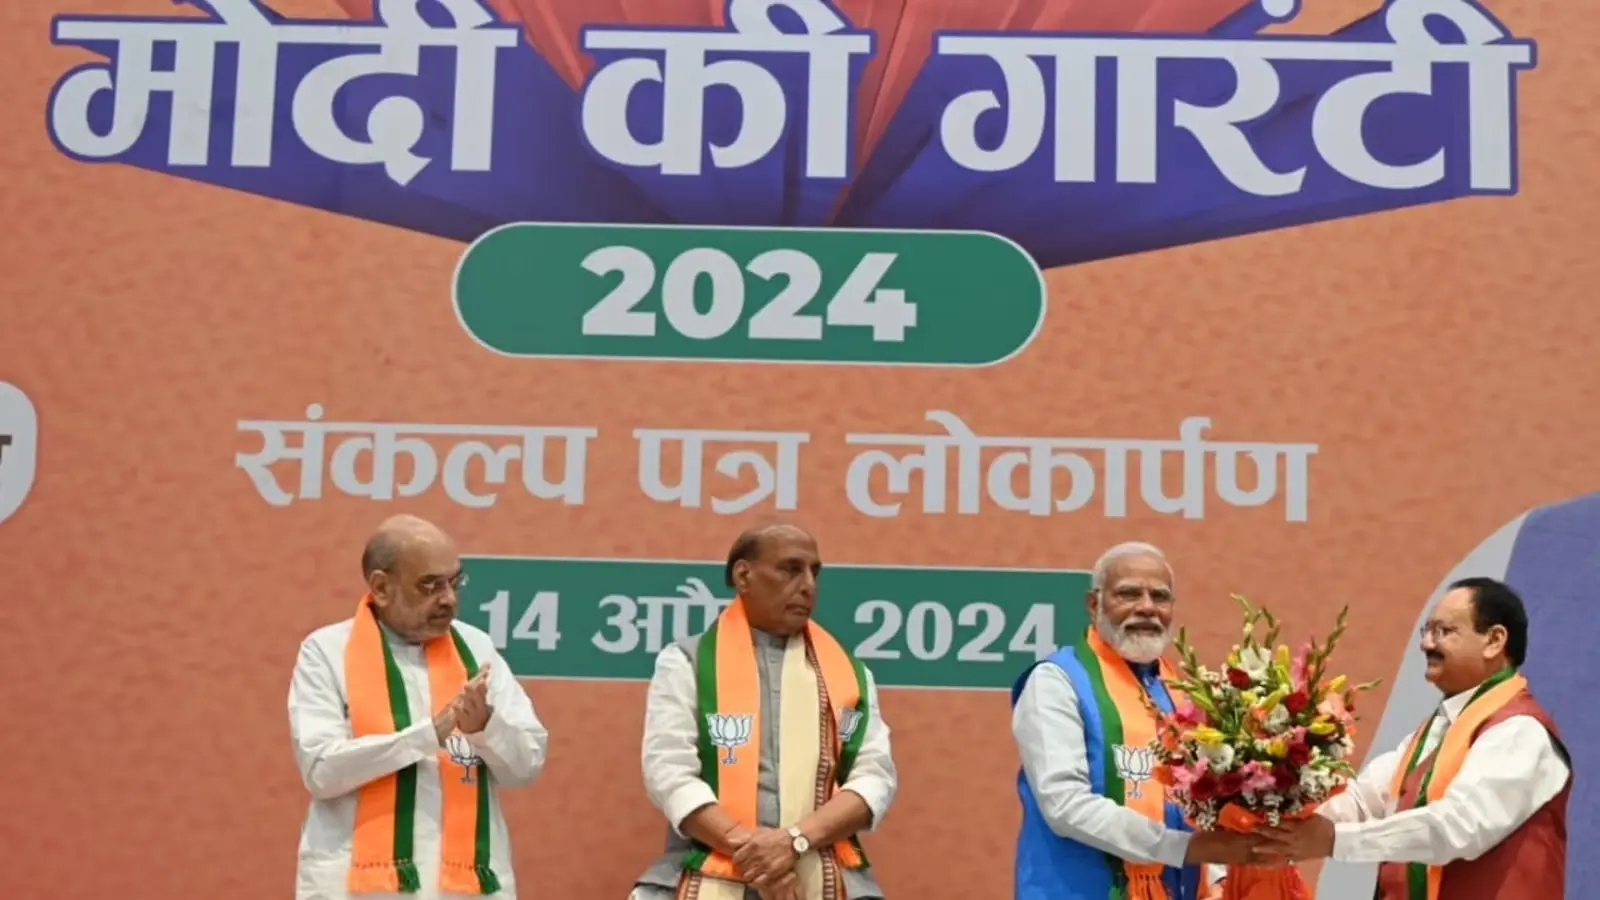 BJP Manifesto 2024: A Vision for India's Future